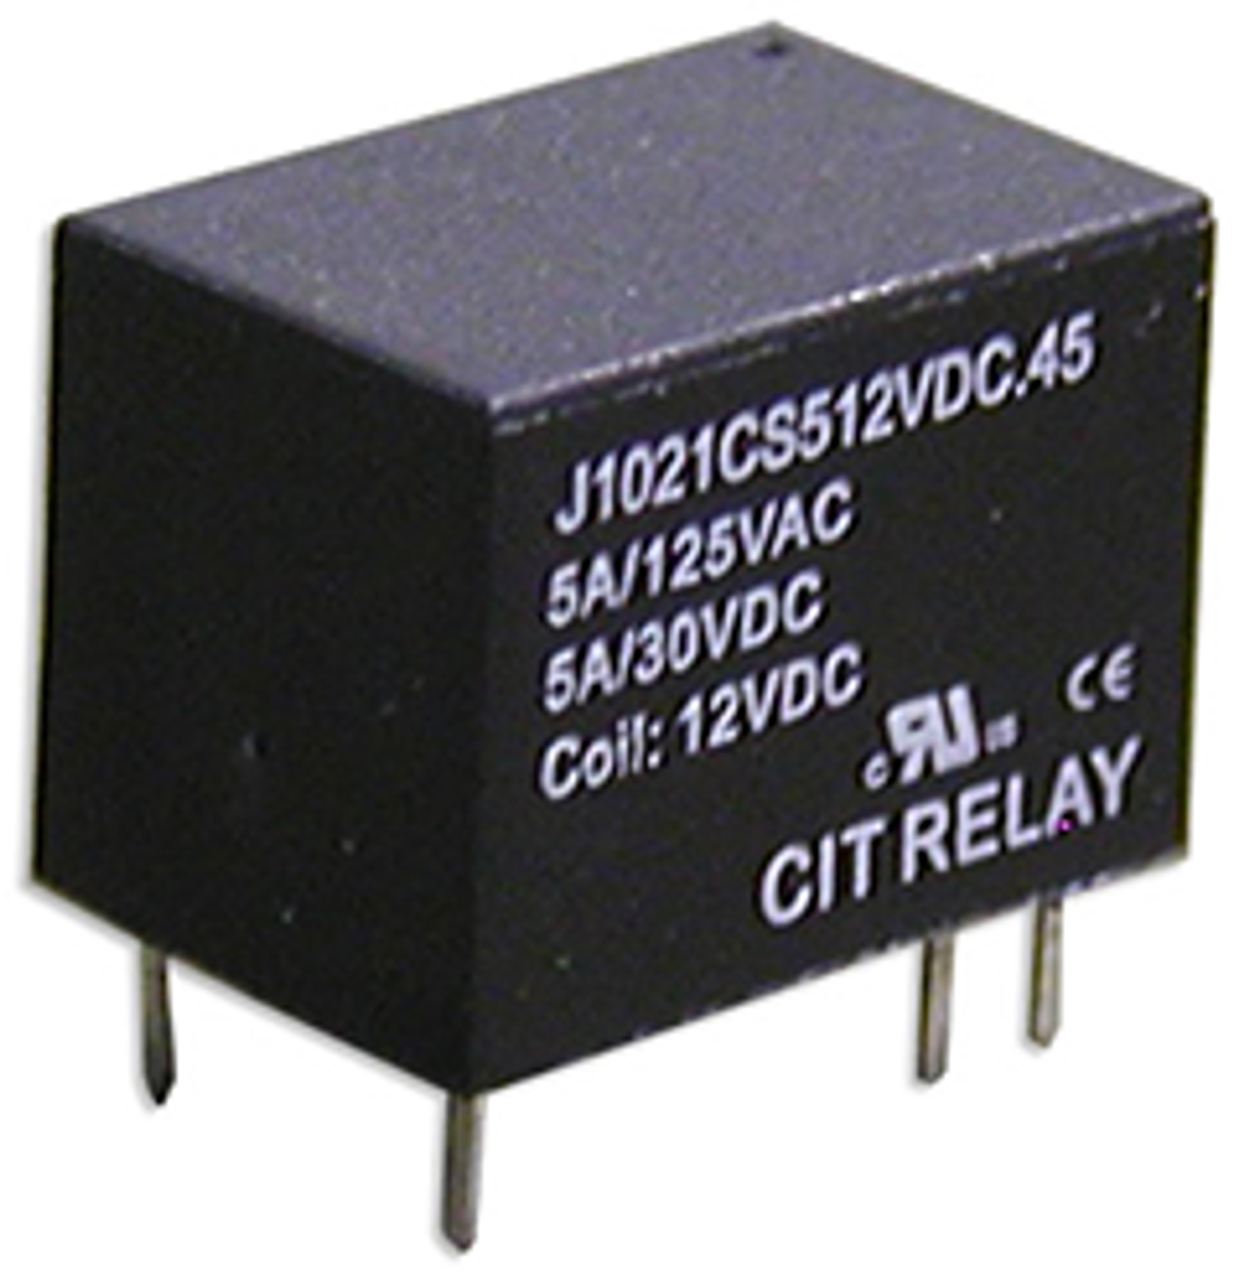 CIT Relay and Switch J1021CS3P12VDC.20 Power Relays